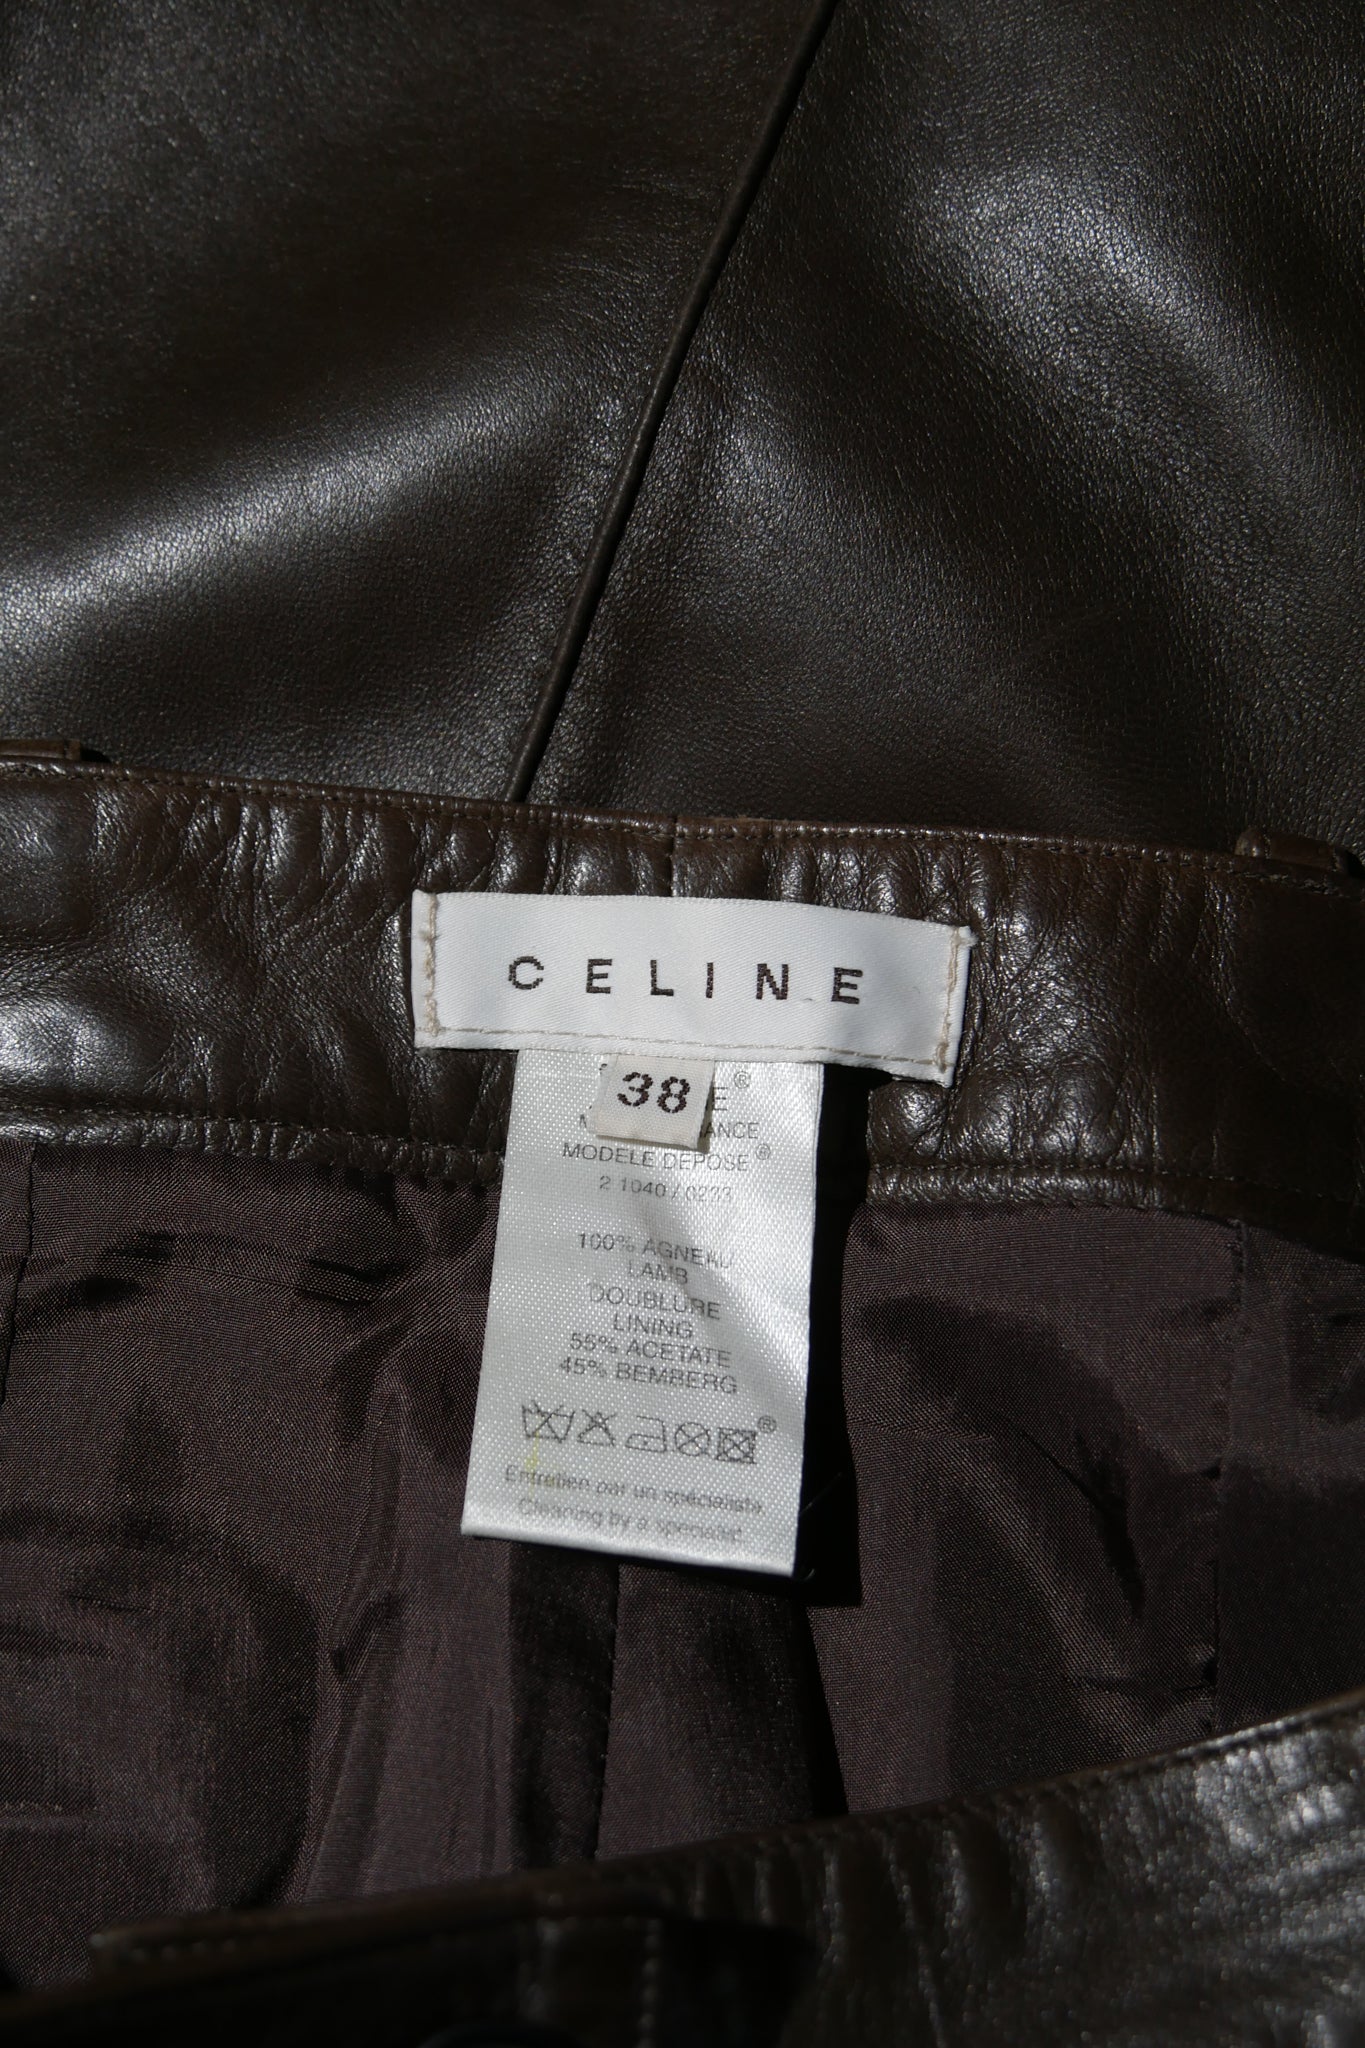 CELINE - Celine by Michael Kors - Brown Lamb Leather Trousers